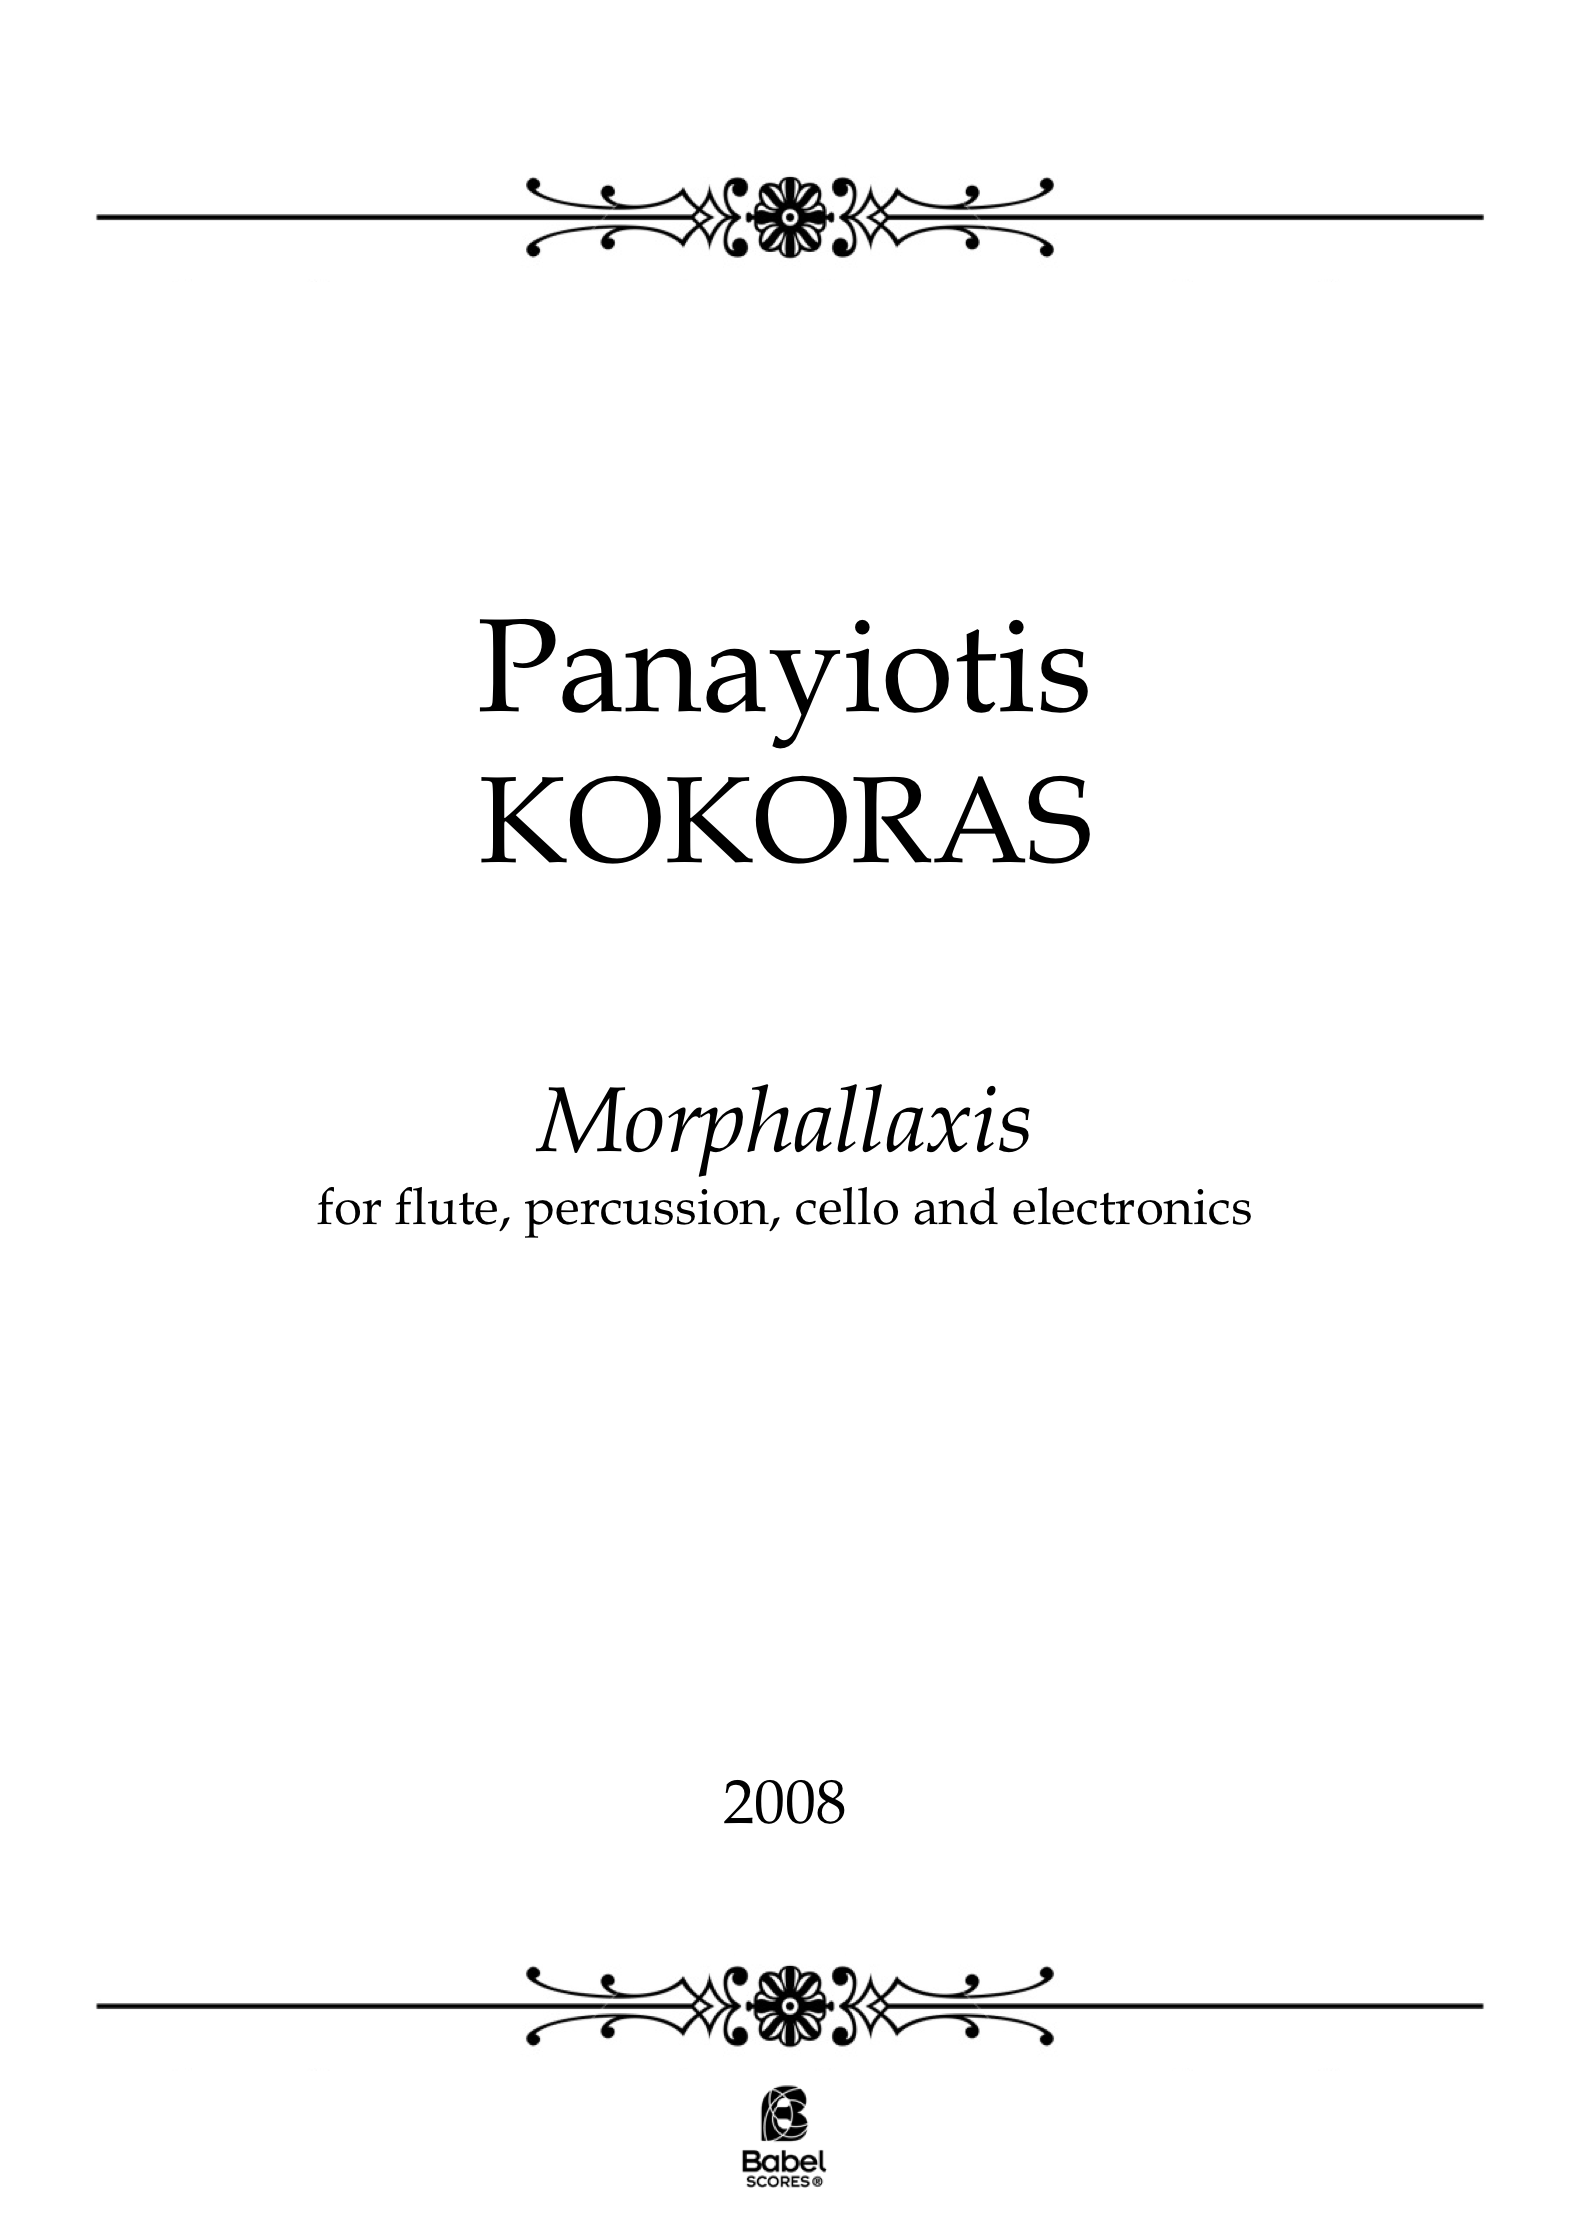 morphallaxis PKokoras full score A4 z 1